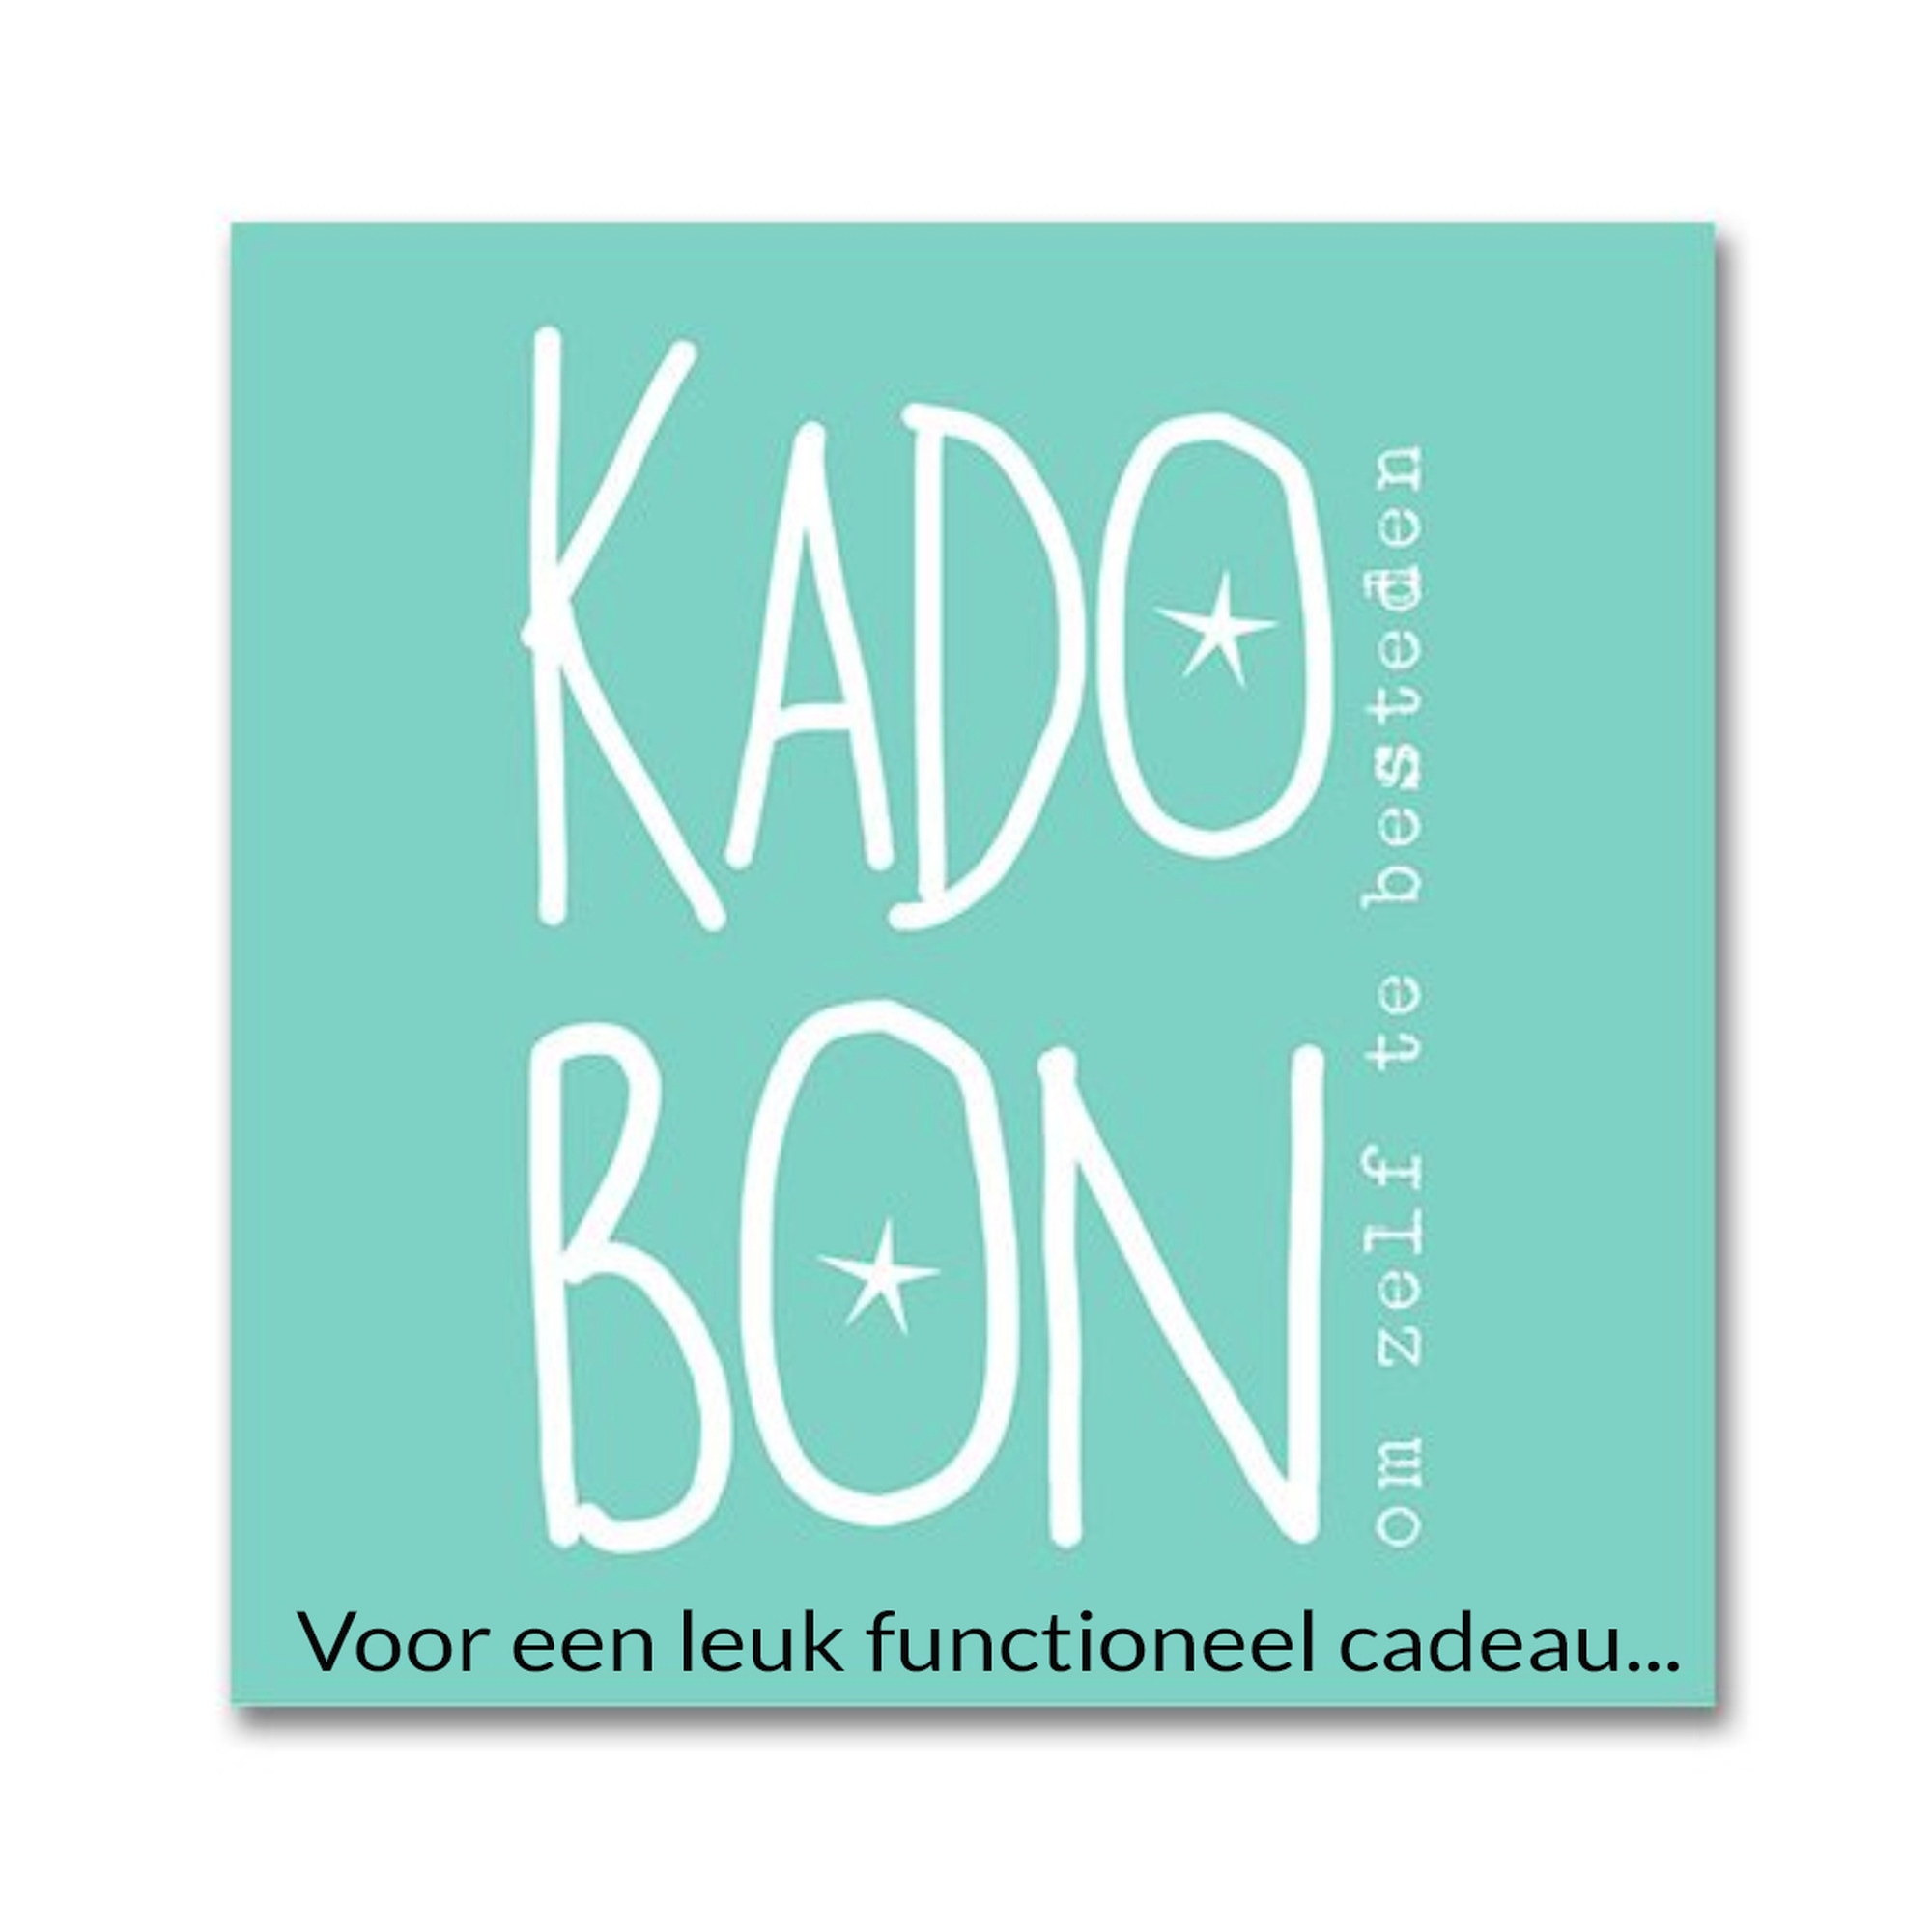 Steenwijk Schoenmode Kadobon Eur 50,00